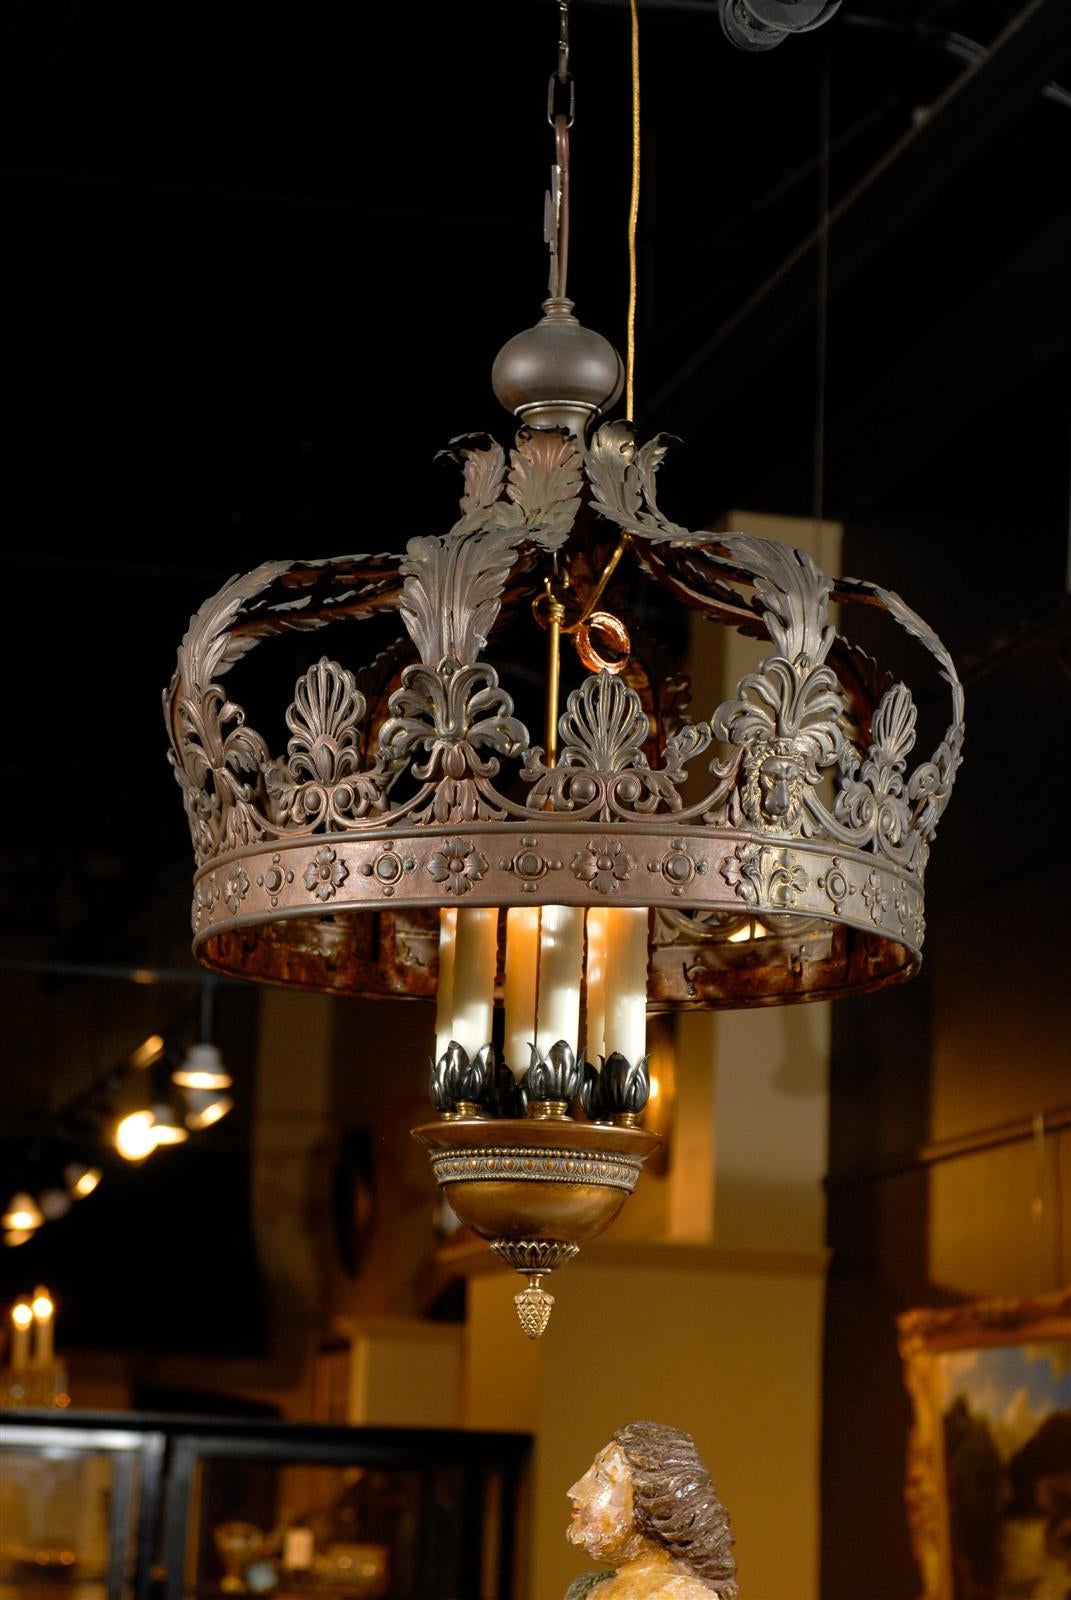 French bronze copper crown chandelier.